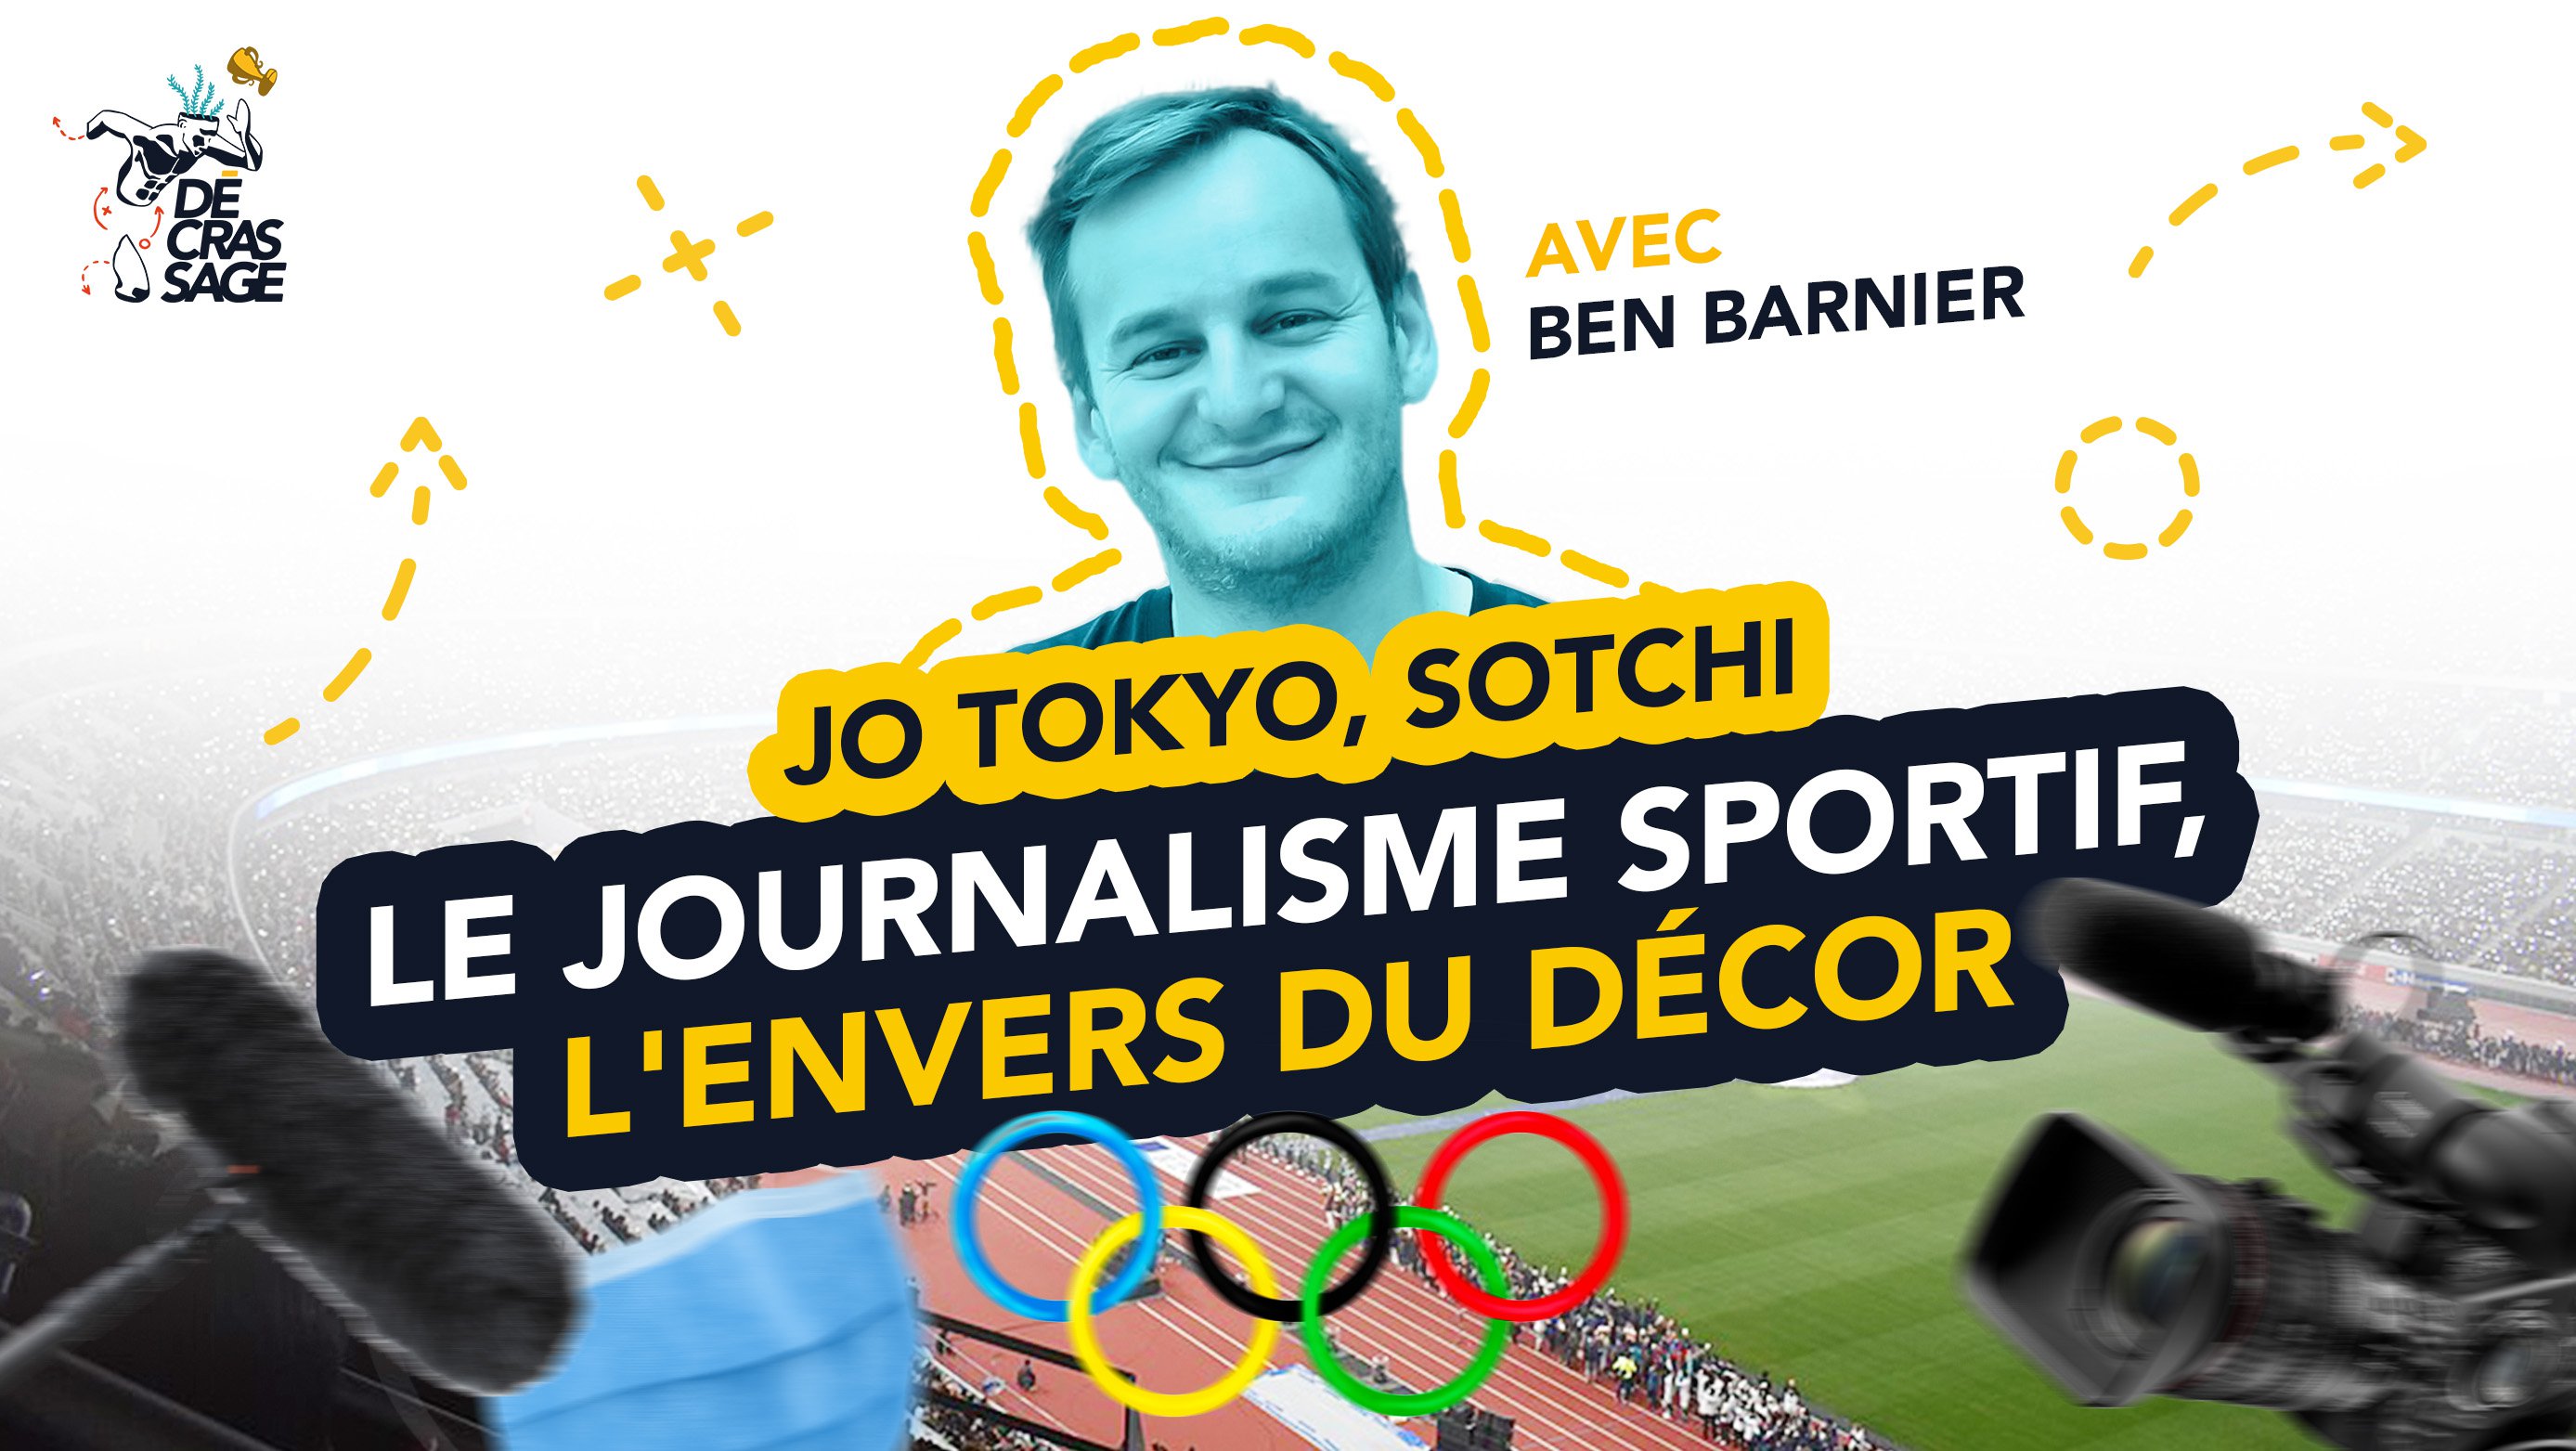 Olimpíadas de Tóquio, Sochi: jornalismo esportivo e bastidores